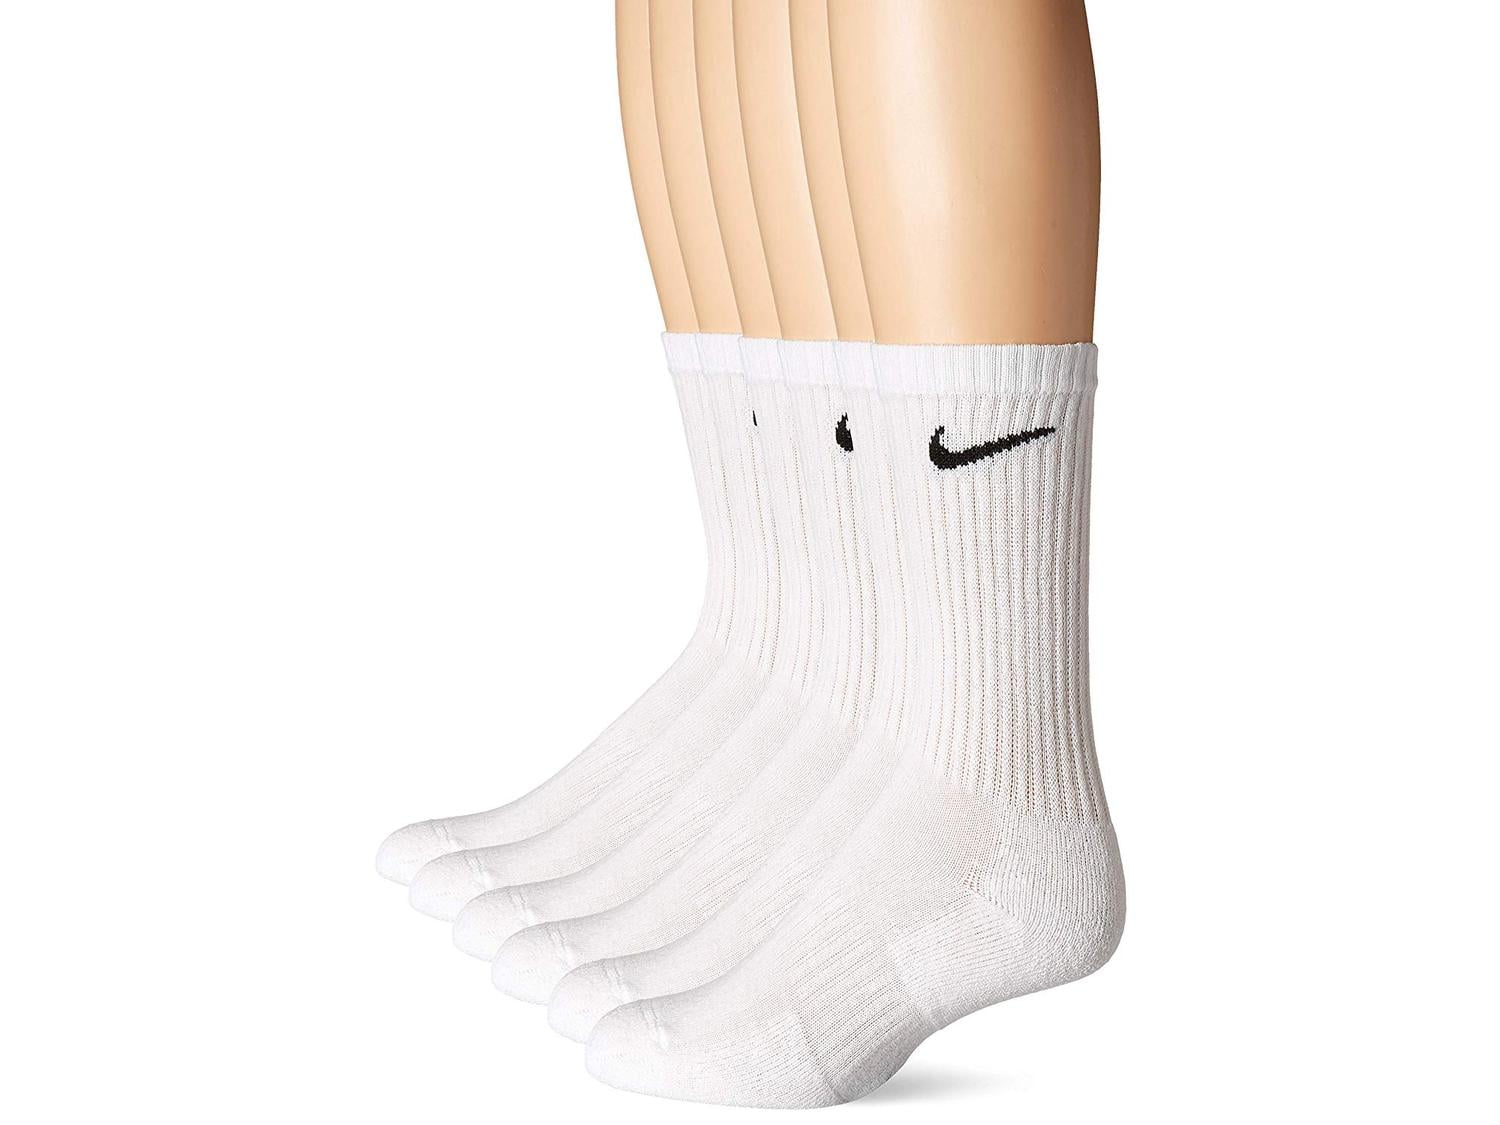 nike socks deals